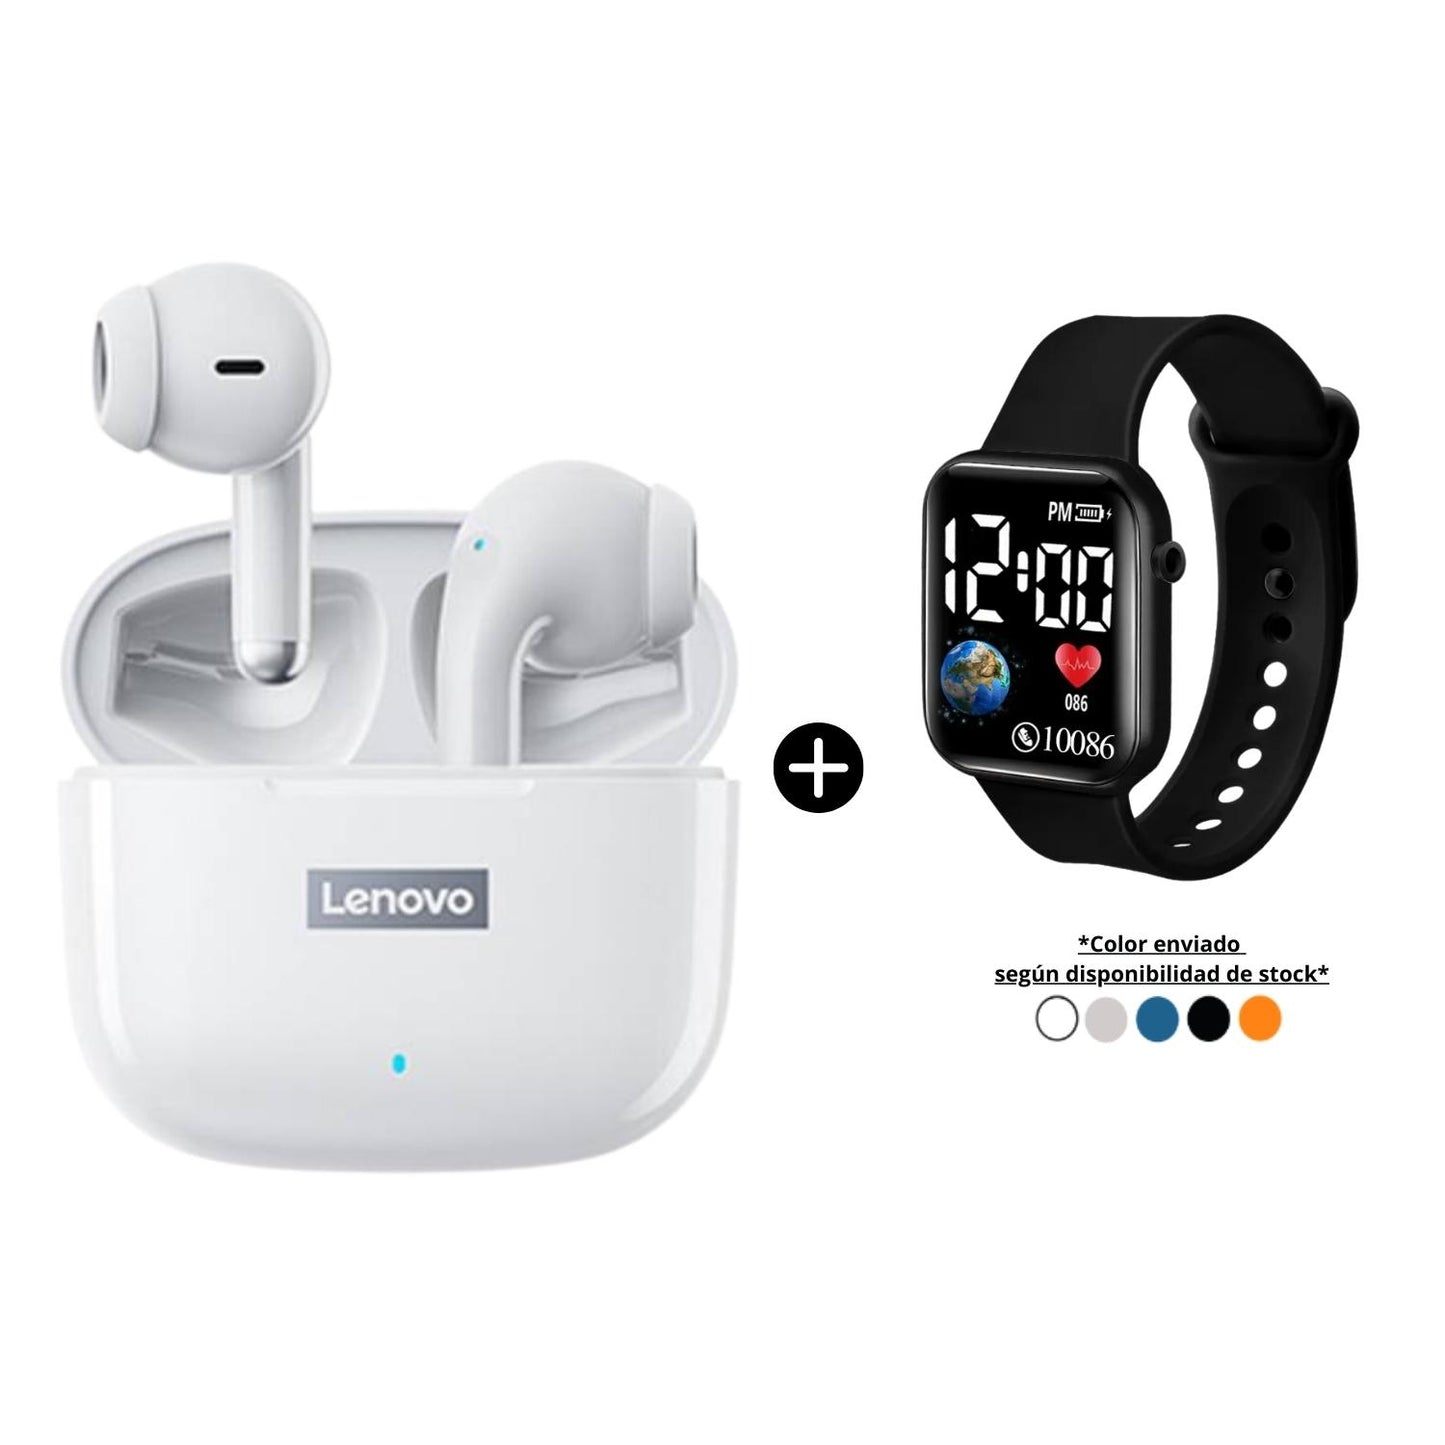 Audífonos Lenovo LP40 PRO Bluetooth 5.1 + Reloj Led Watch de regalo